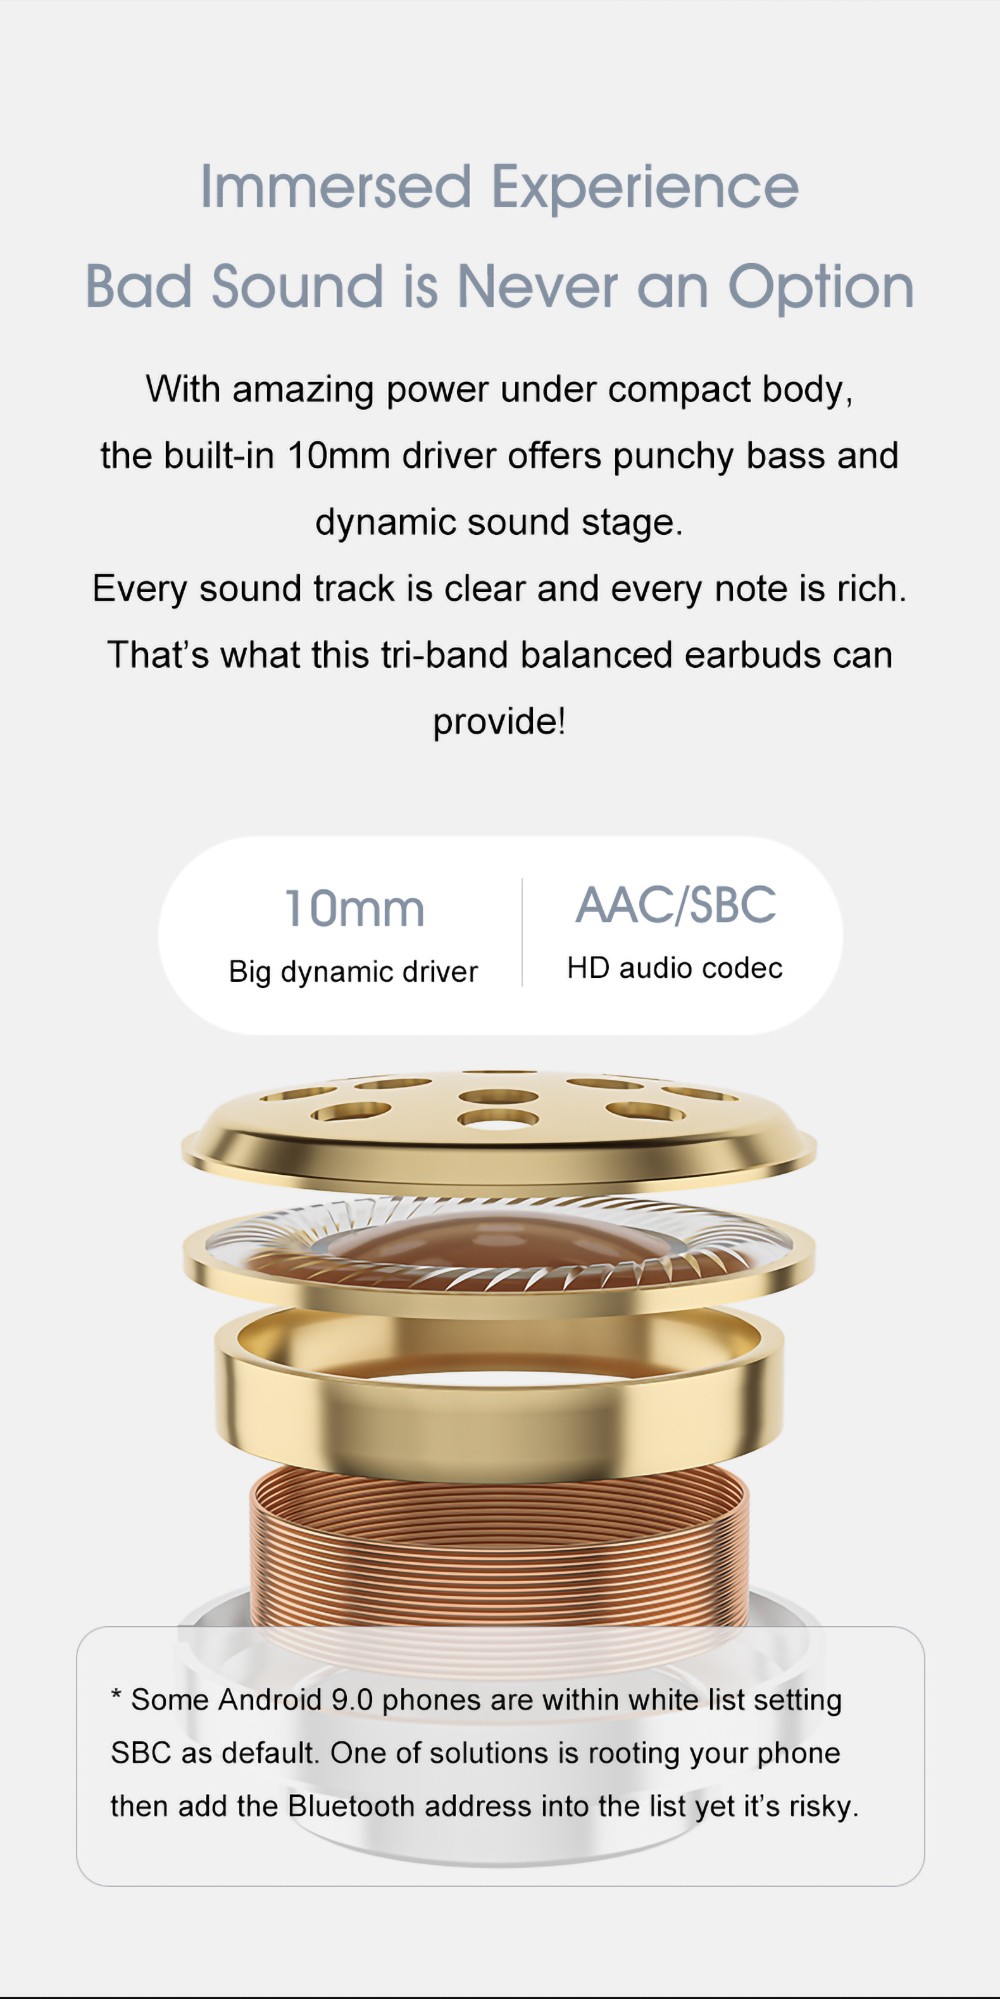 QCY HT03 Bluetooth 5.1 TWS Auriculares inalámbricos con cancelación activa de ruido